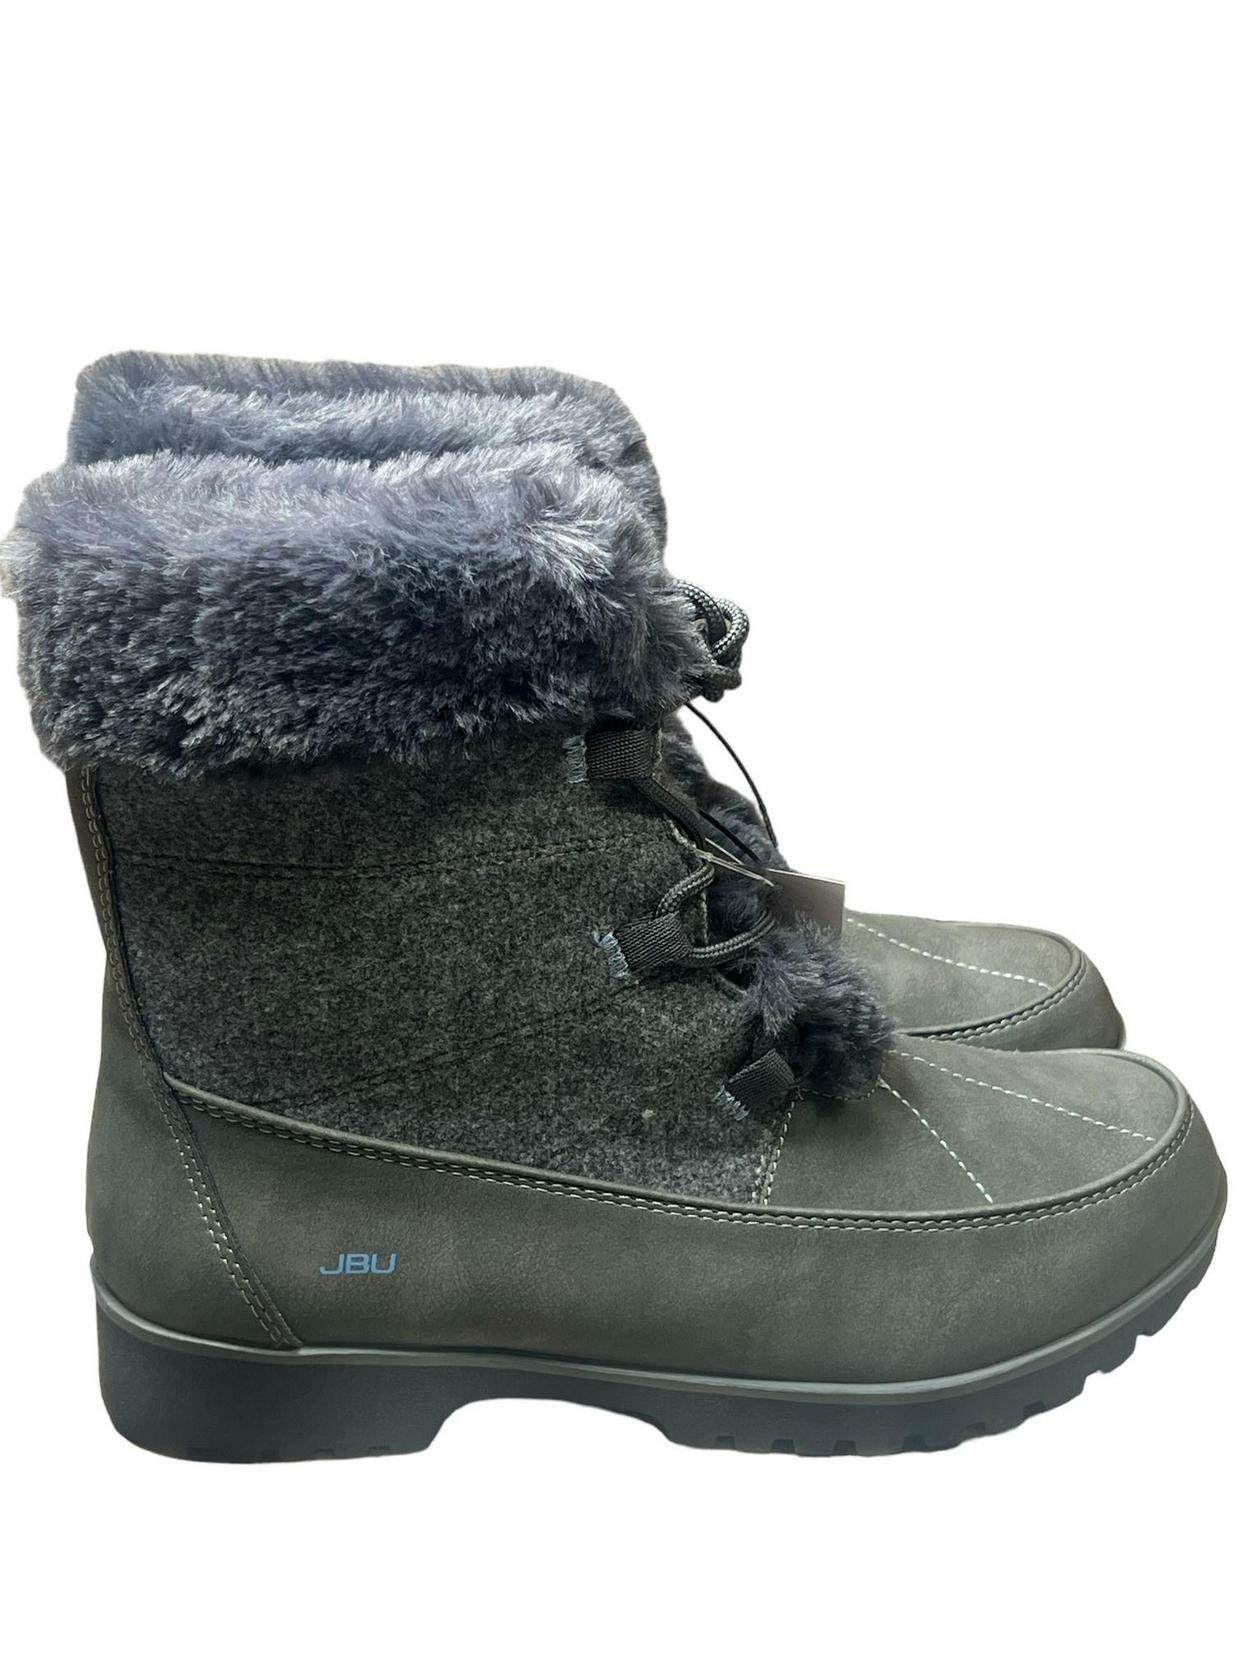 JBU Colorado Dark Grey Boots - Size 9 Ladies